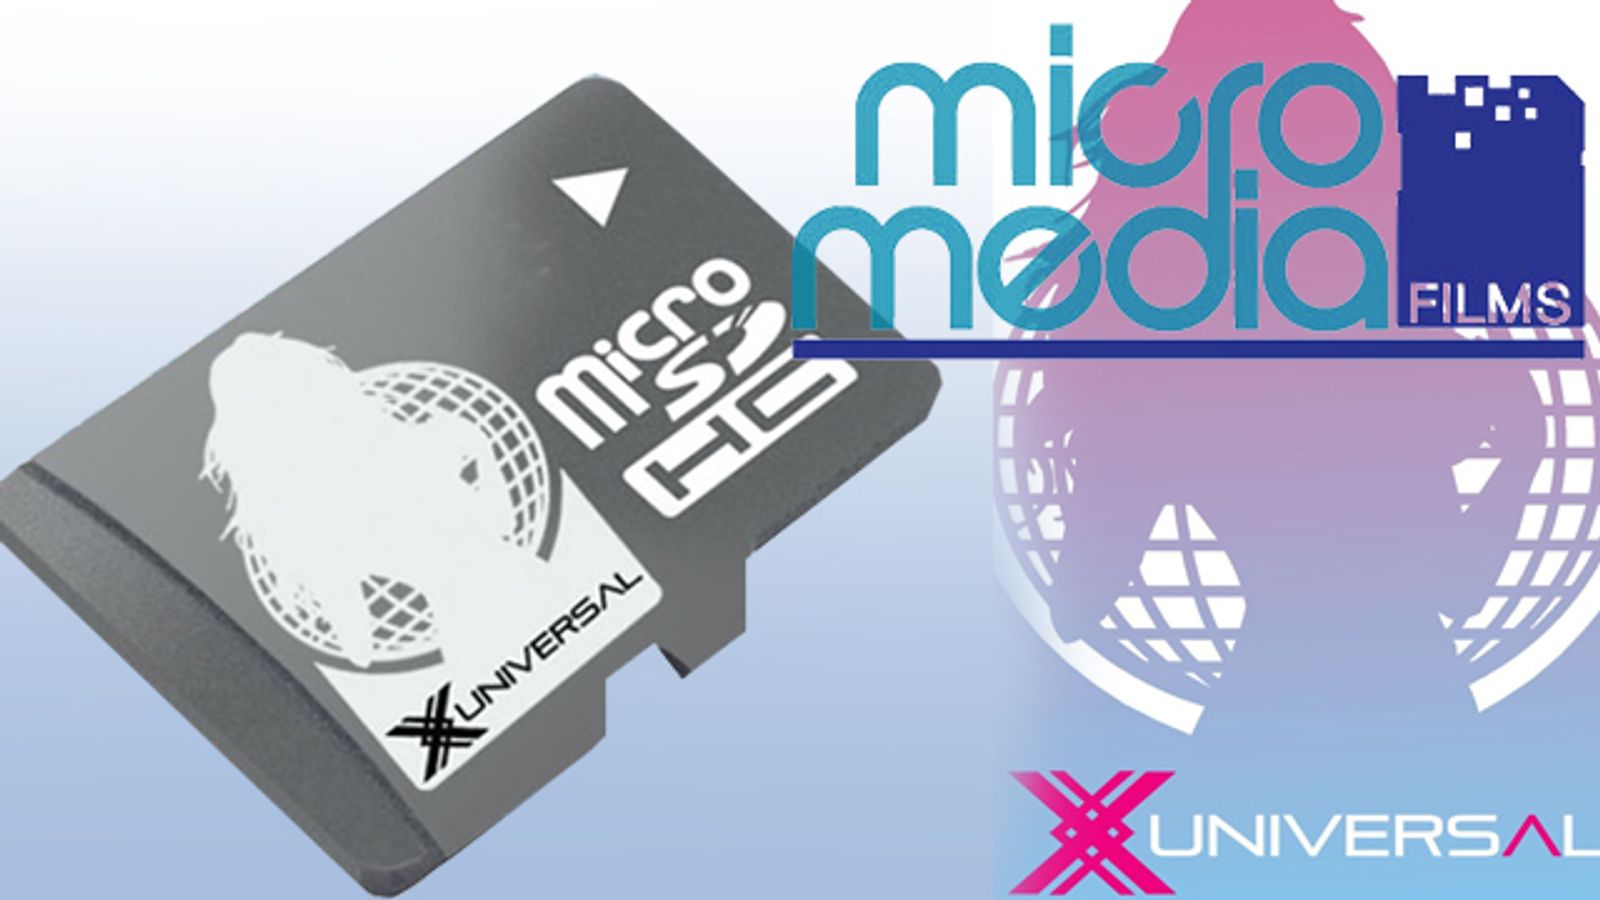 Micro Media Films